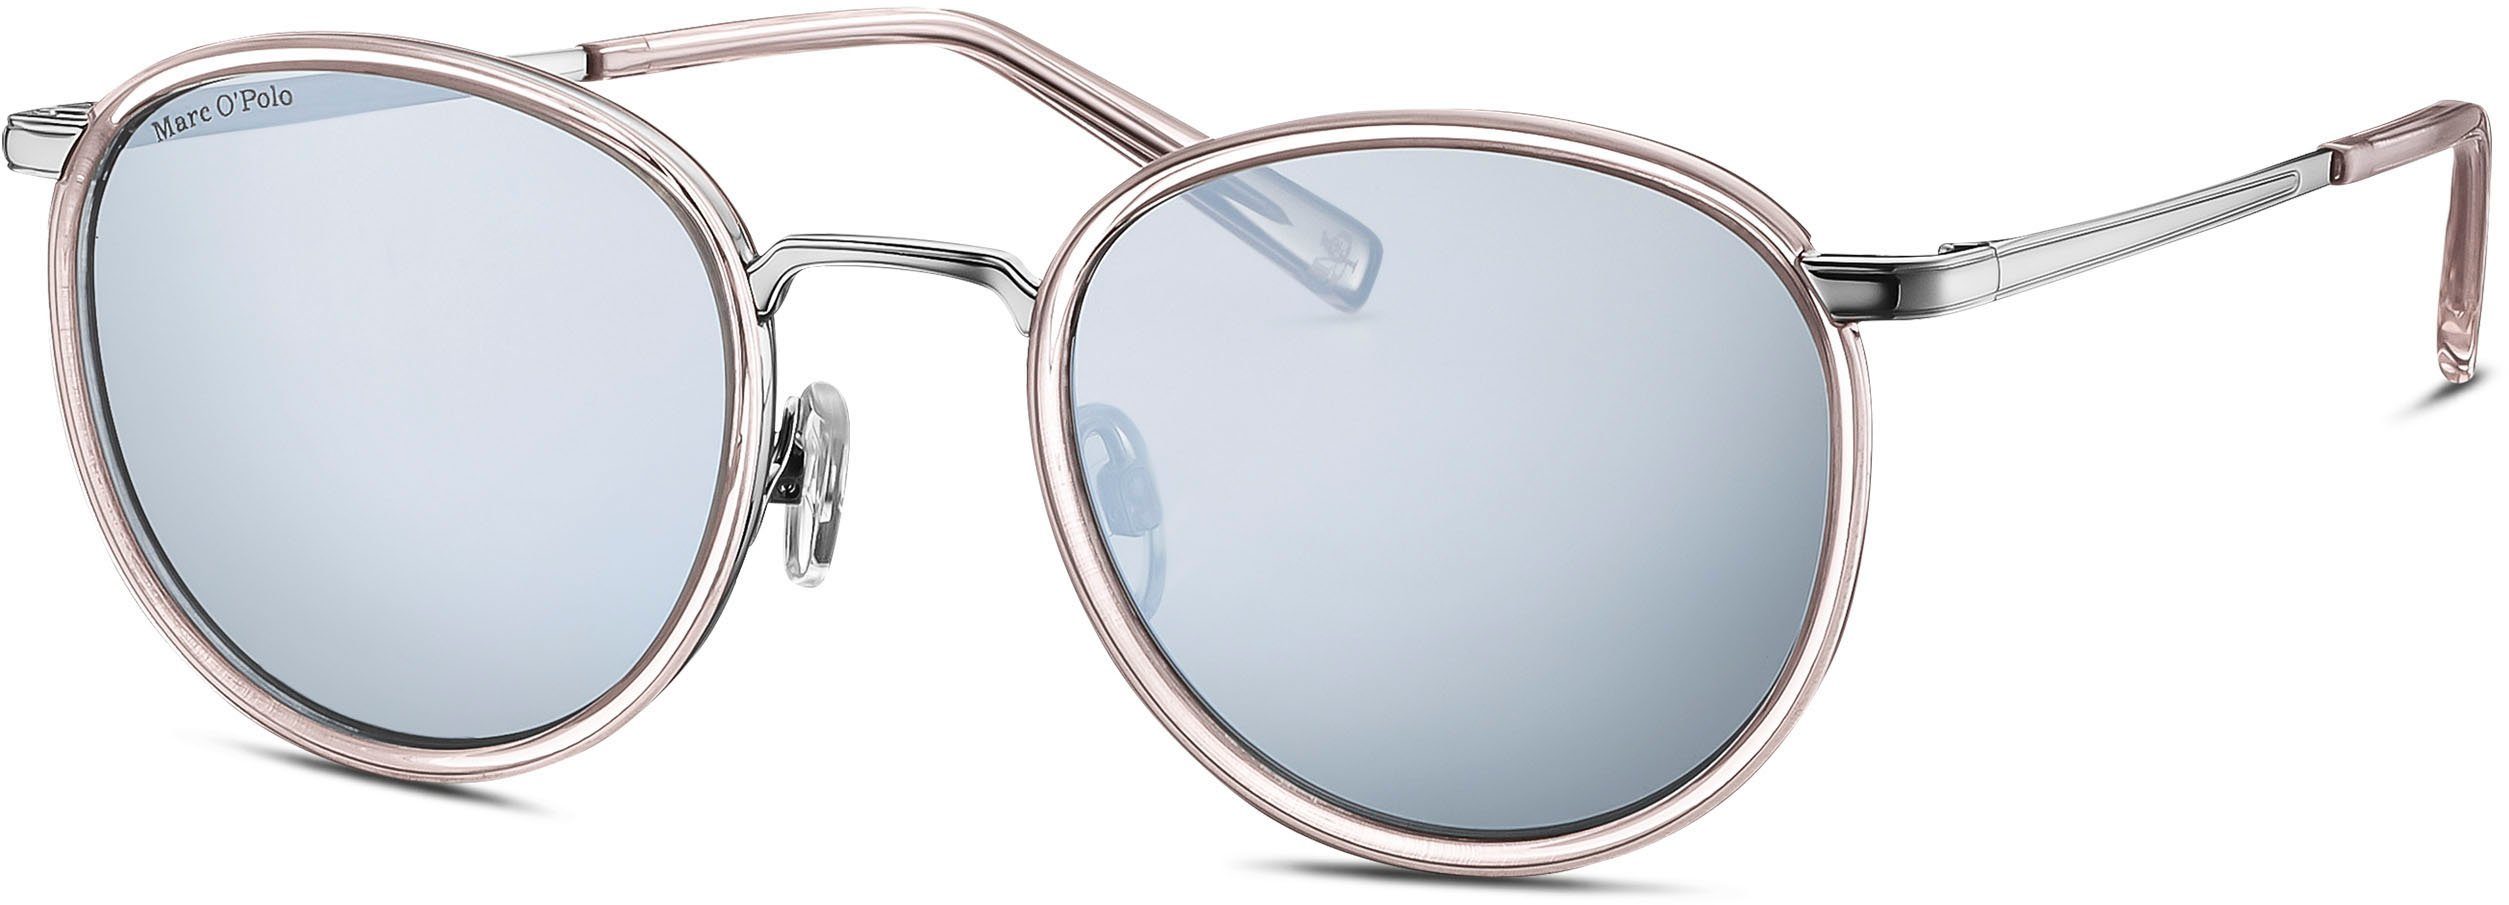 Marc O'Polo Sonnenbrille Modell 505105 Panto-Form hellbraun | Sonnenbrillen